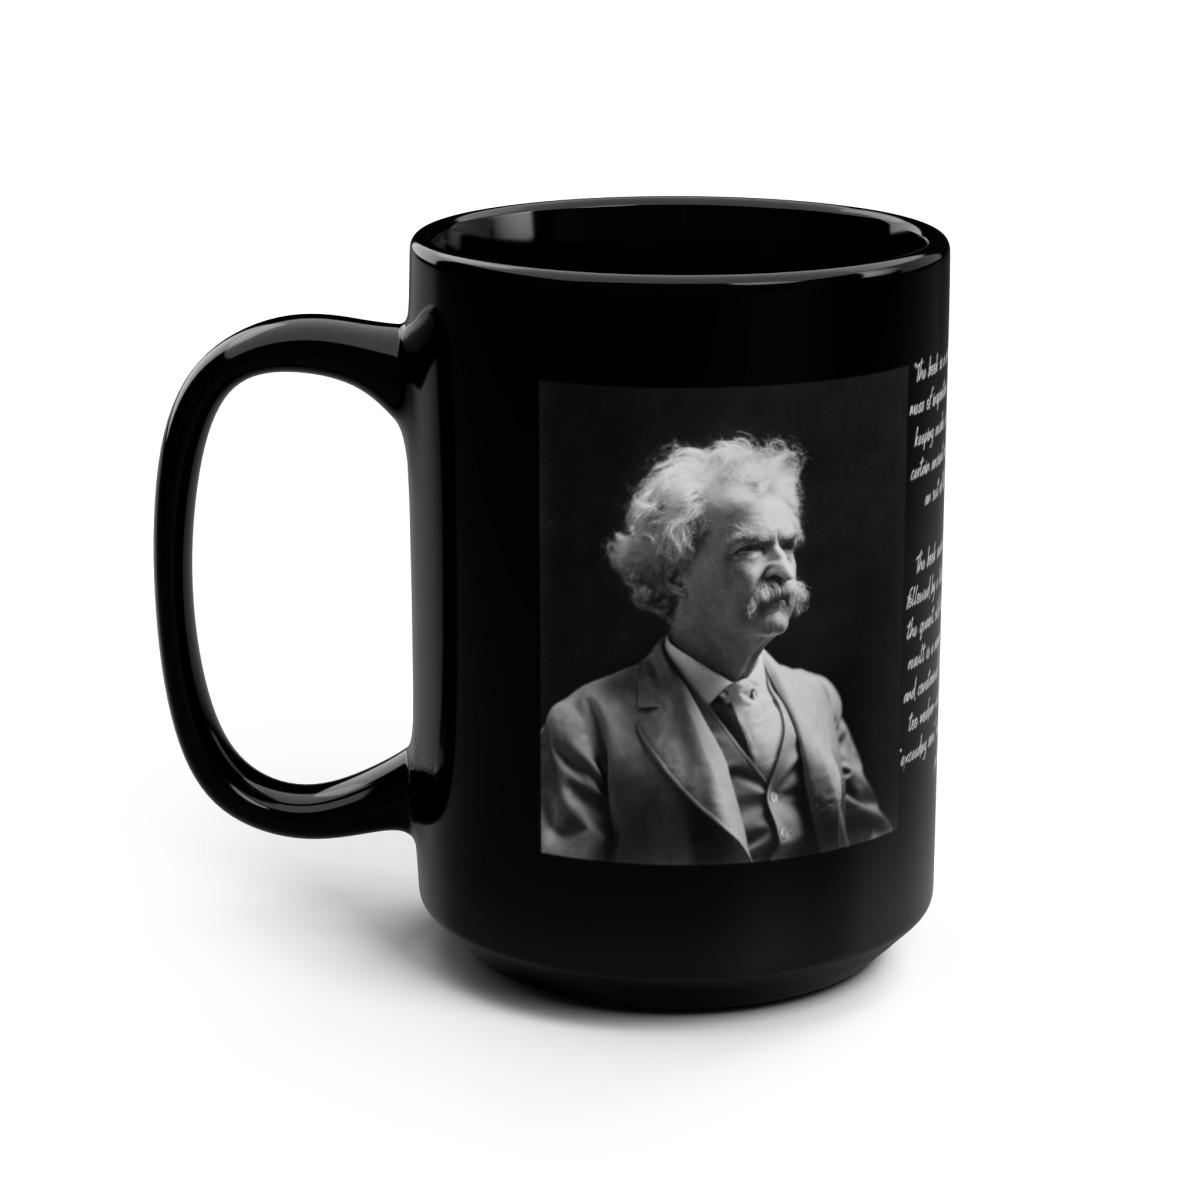 Mark Twain Mug: Witty Black 15 oz Mug with a Critique of Book of Mormon product thumbnail image